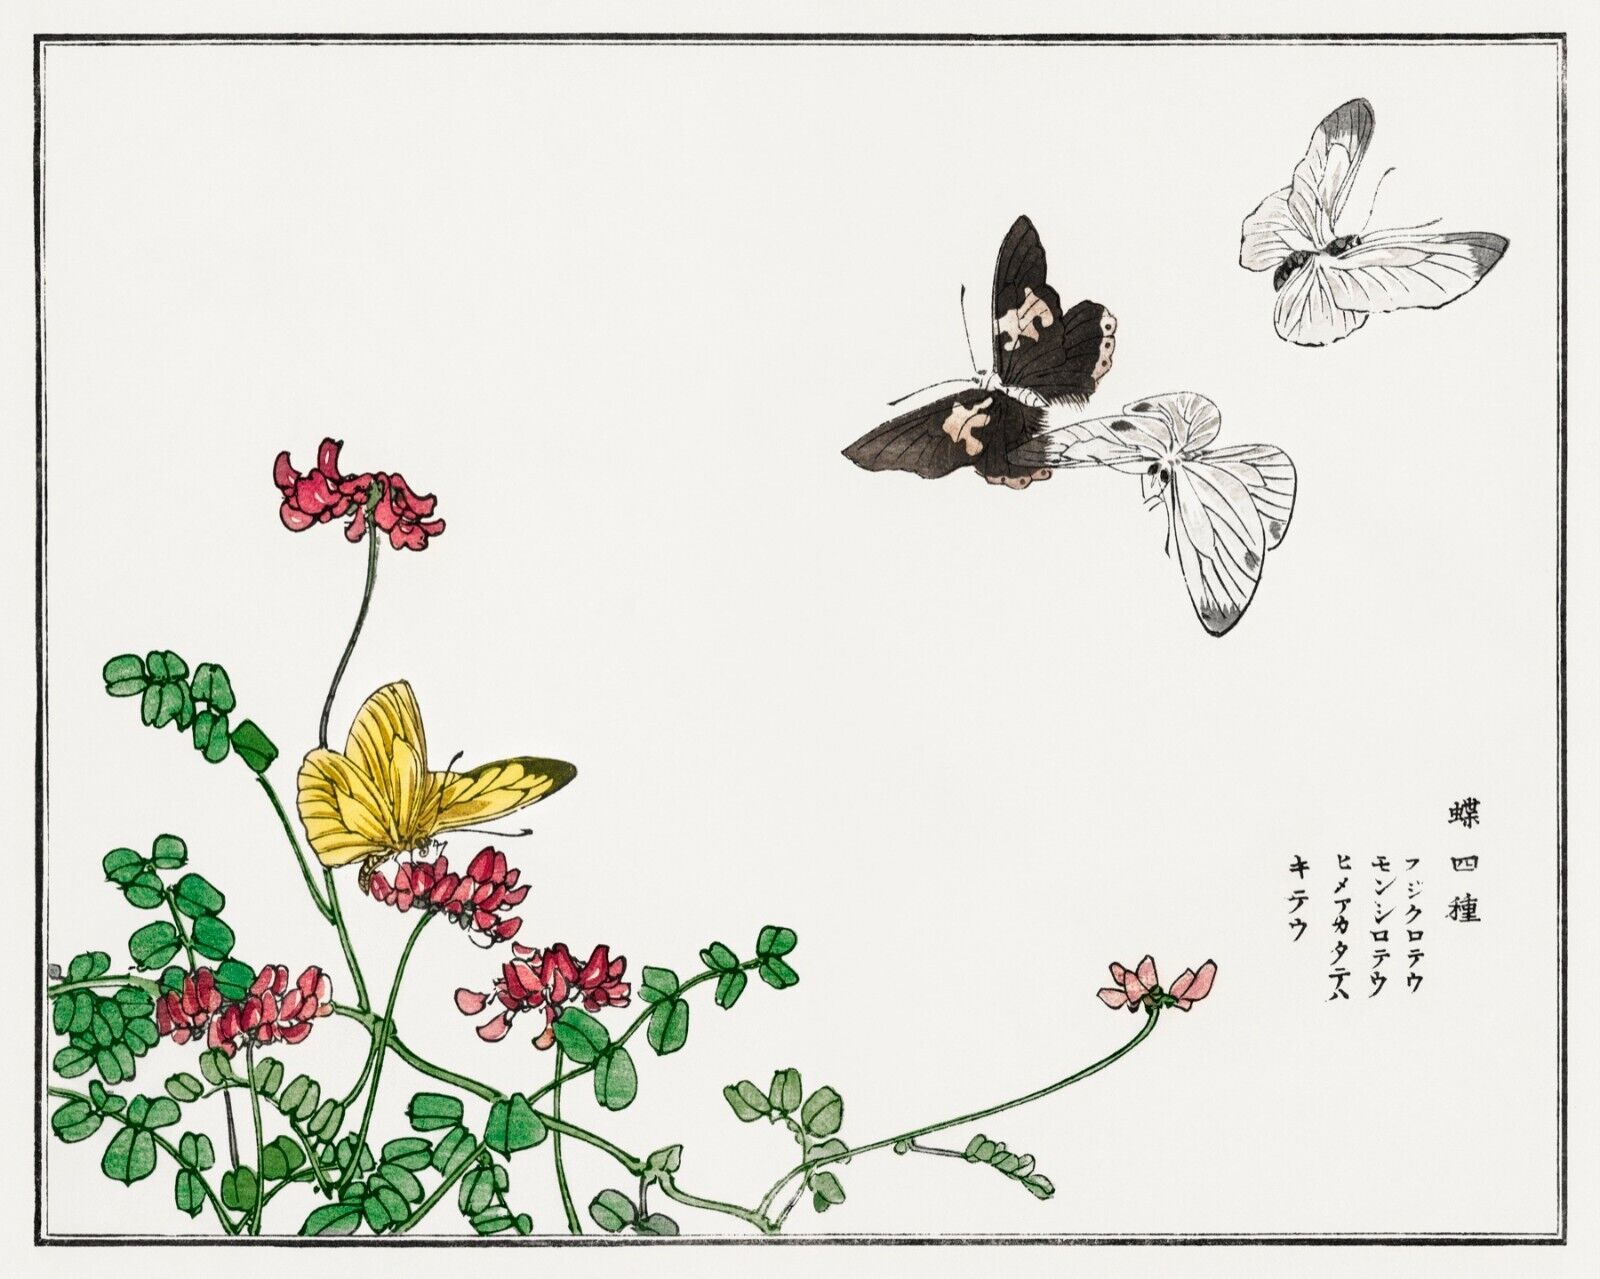 10073.Decor Poster.Room home wall.1910 Japan print.Morimoto Toko art.Floral